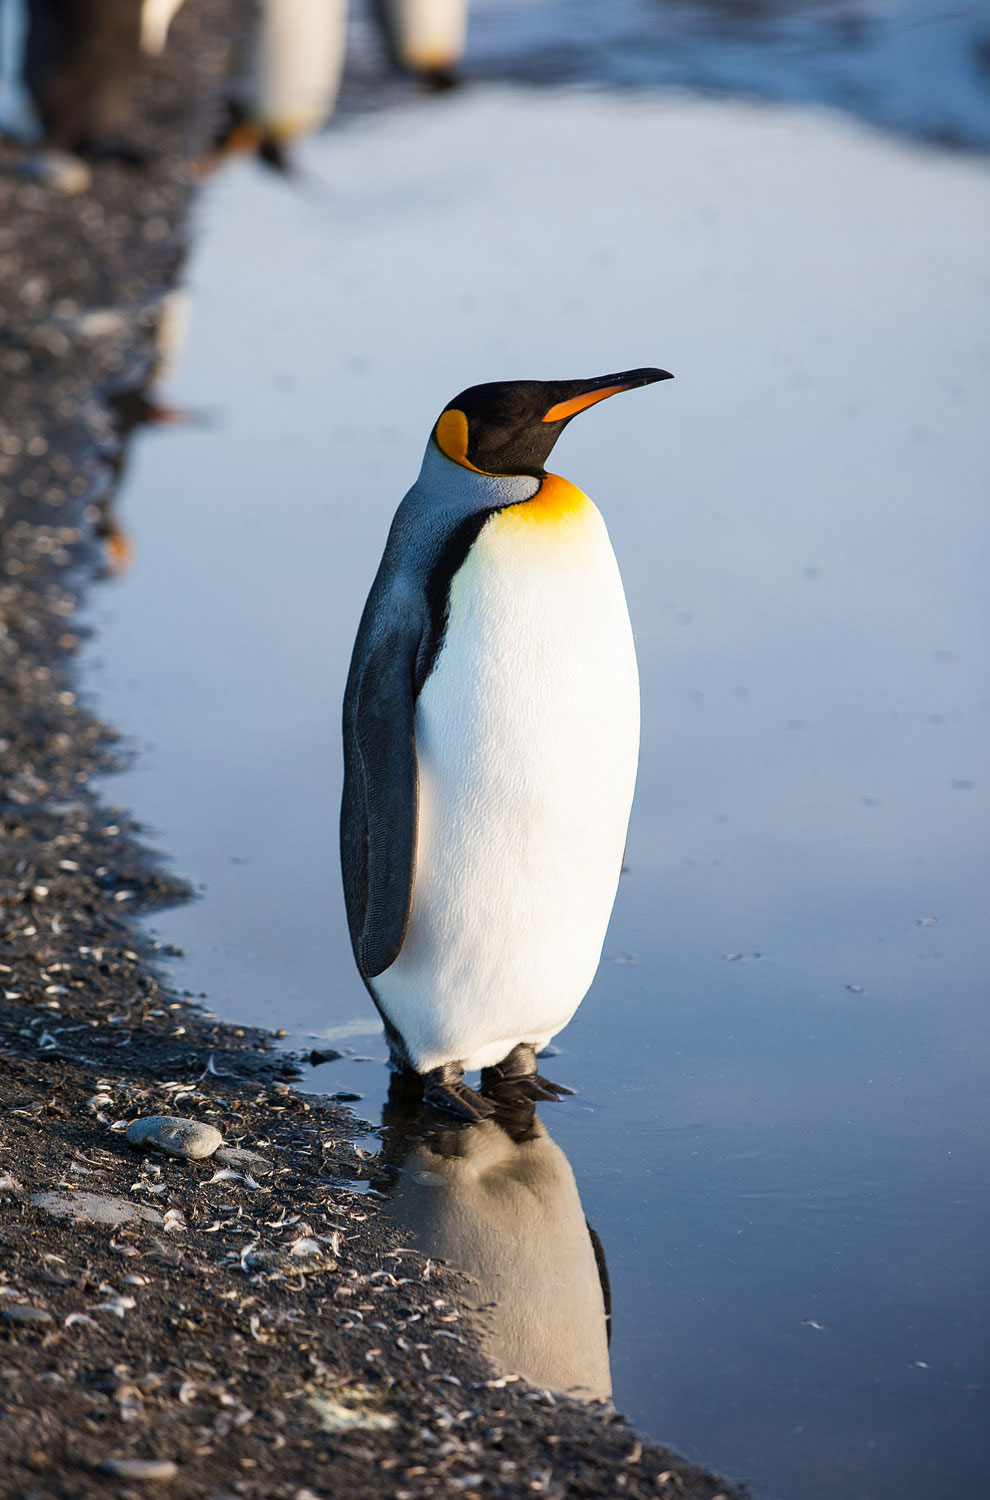 Пингвины в Антарктиде